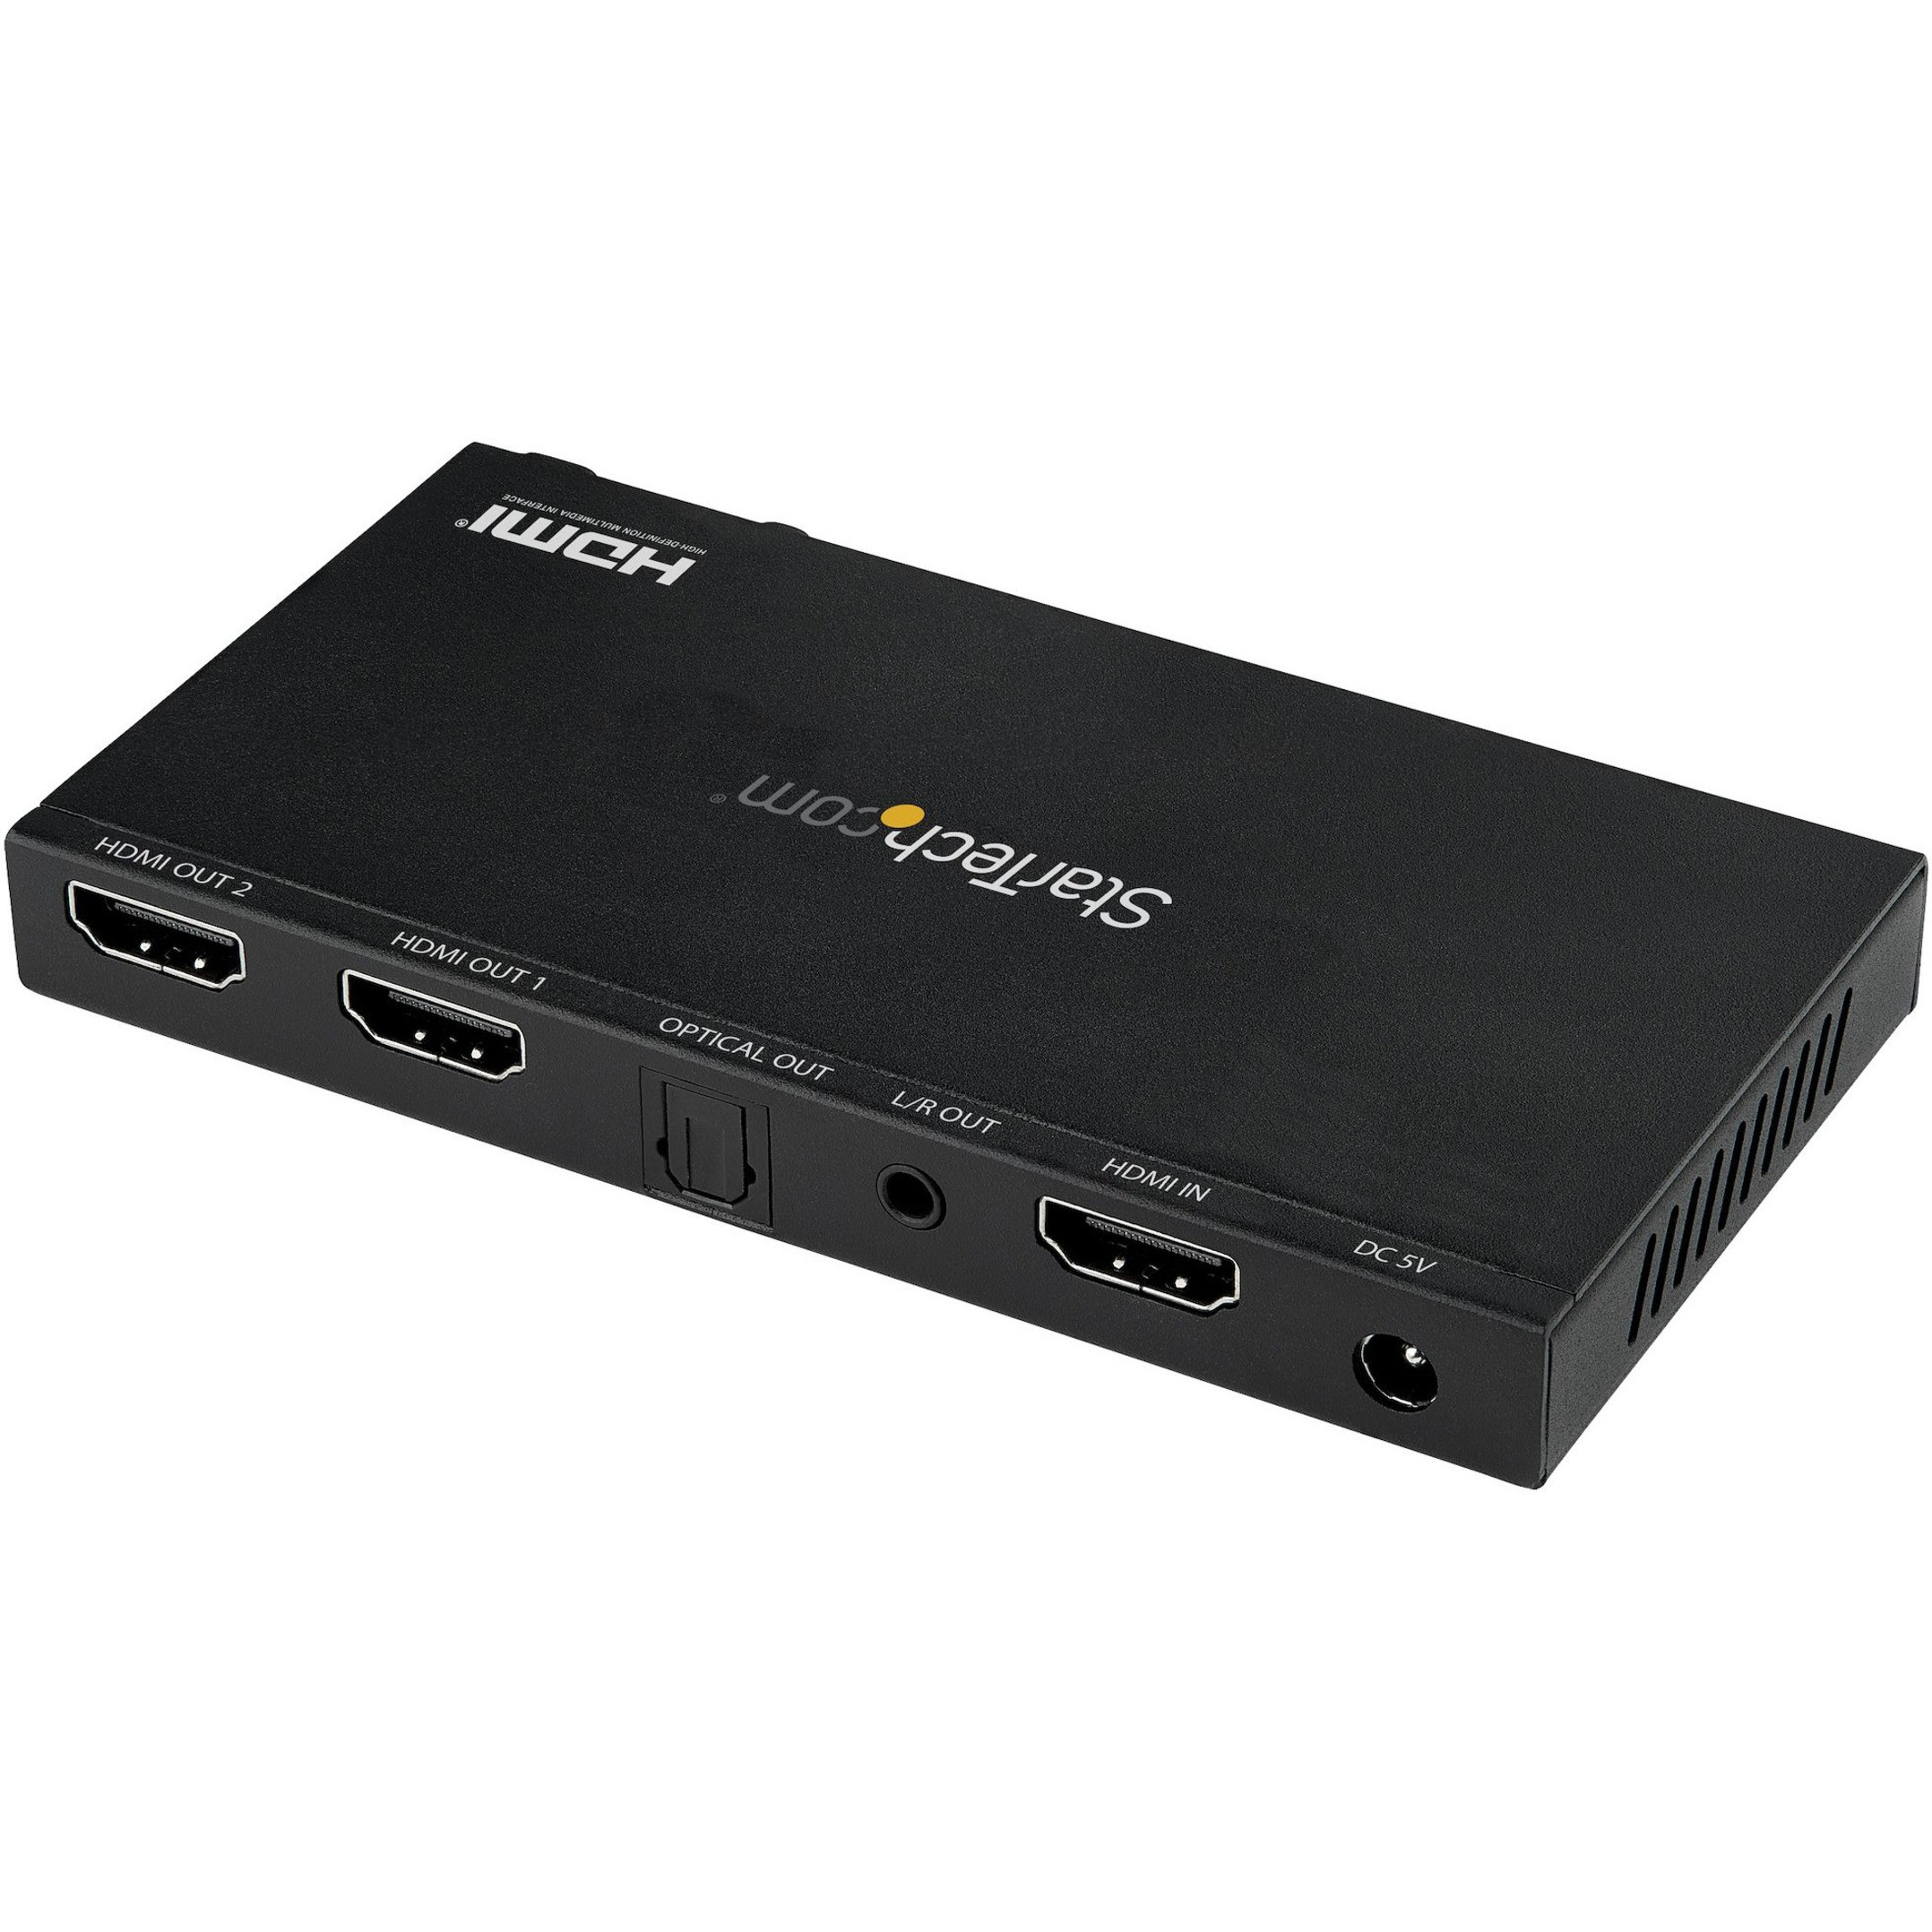 Startech .com 2-Port HDMI Splitter (1×2), 4K 60Hz UHD HDMI 2.0 Audio Video Splitter w/ Scaler and Audio Extractor, EDID Copy, TV/Projector2… ST122HD20S